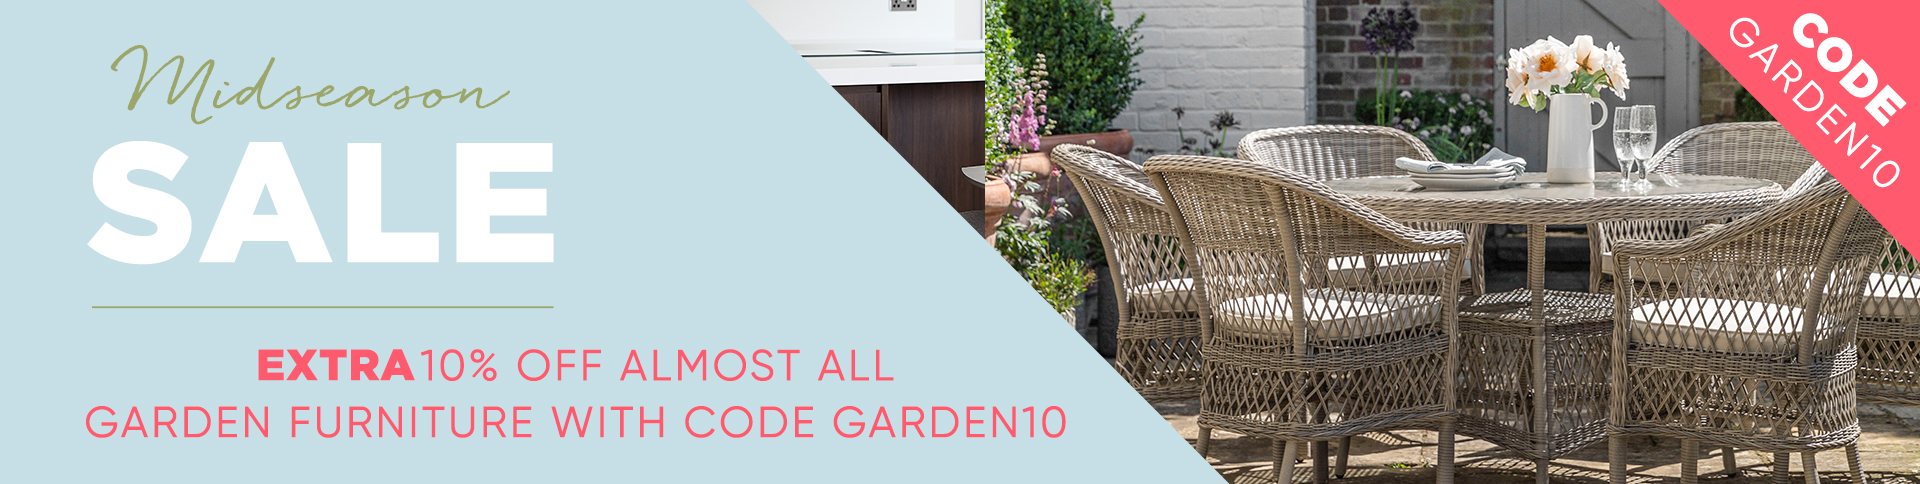 Garden Code Offer - Midseason Sale